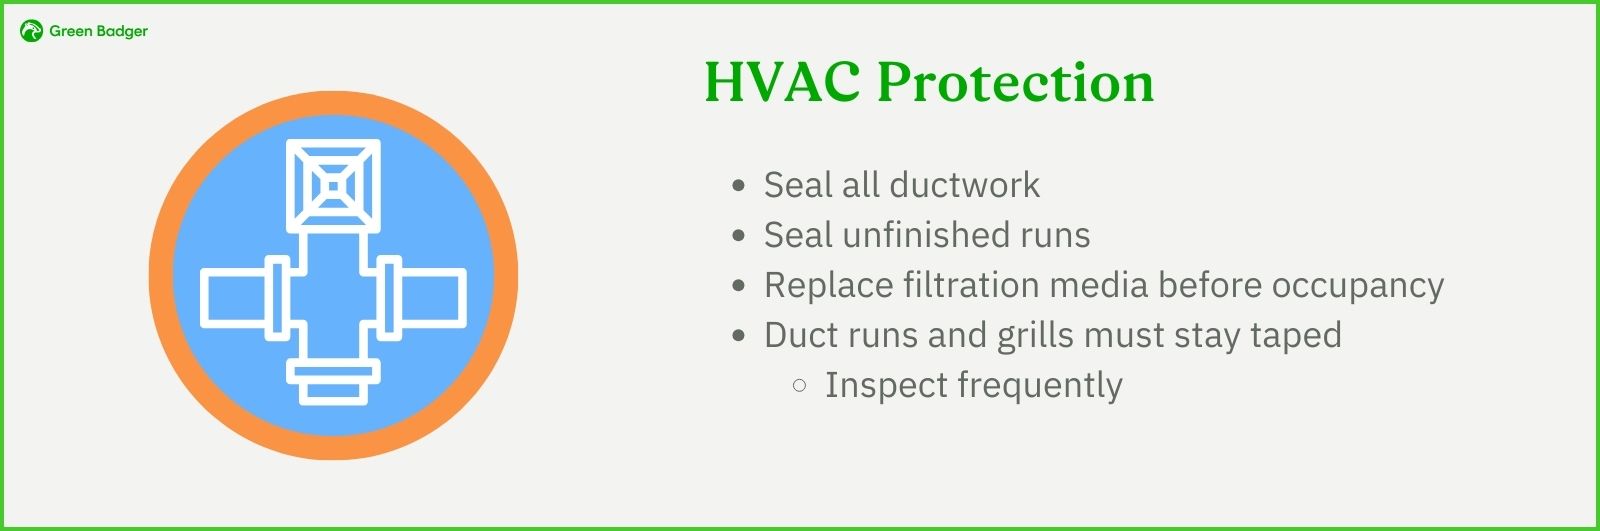 IEQc3 - HVAC Protection